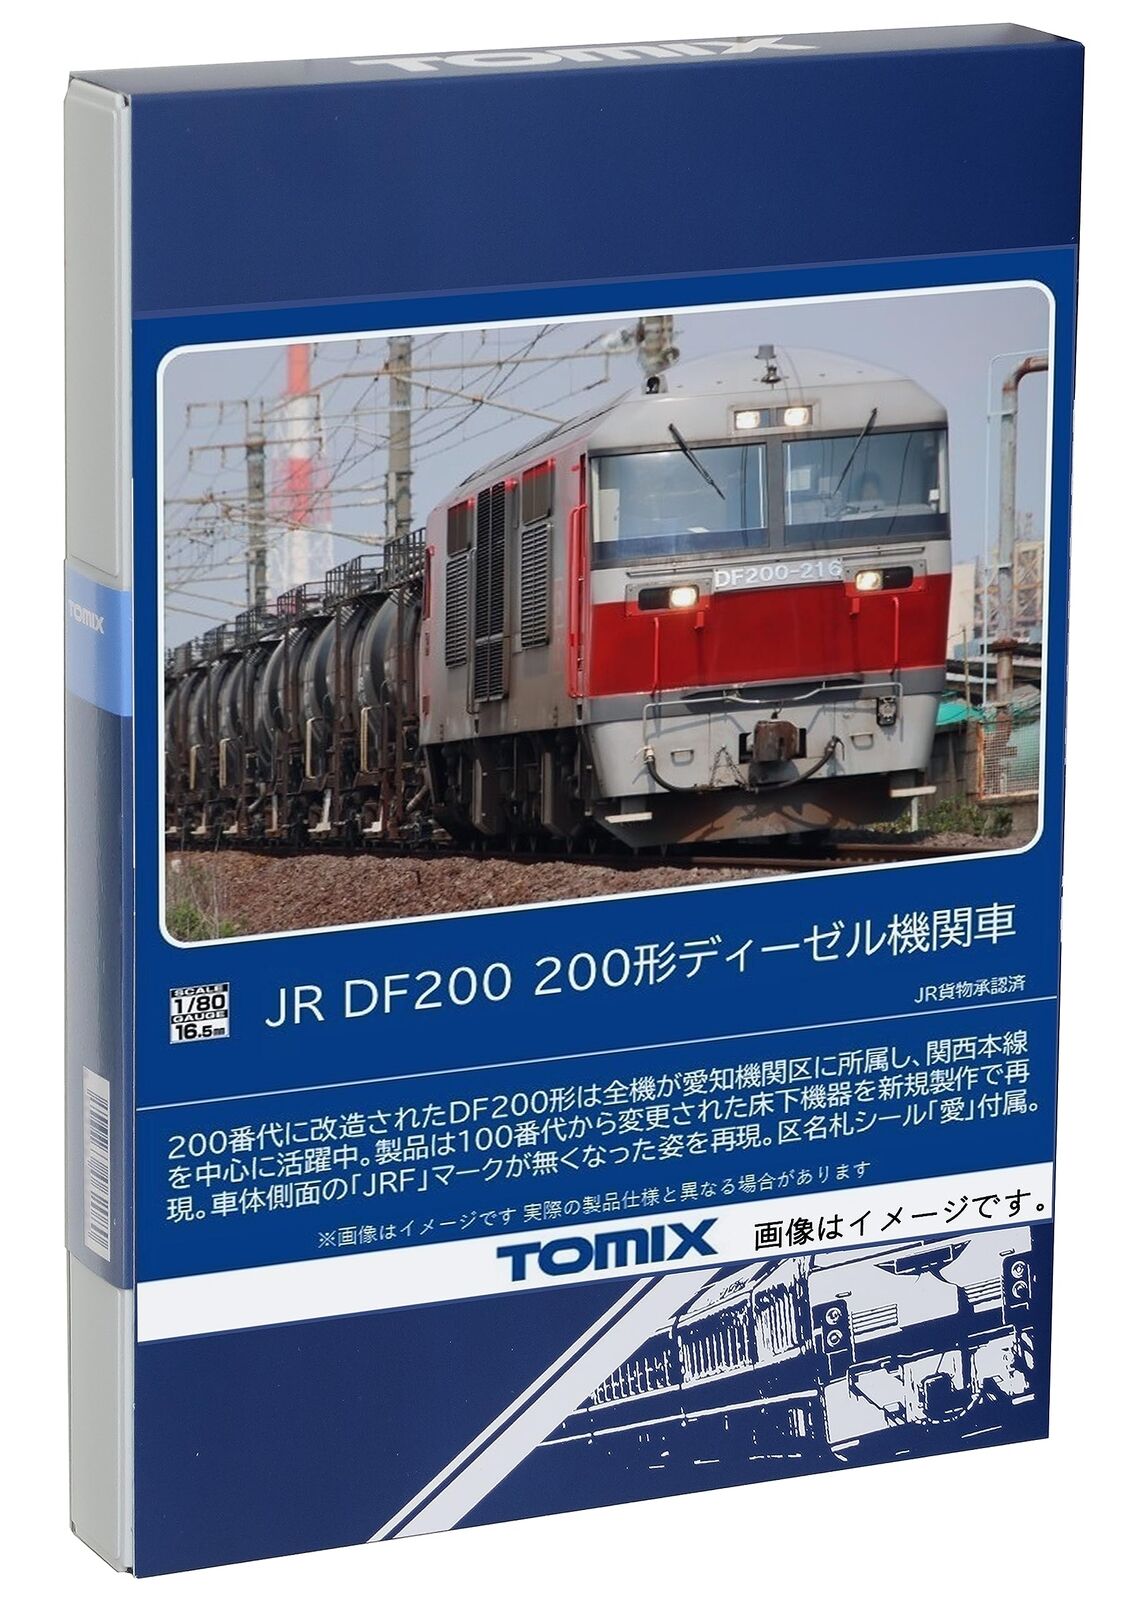 TOMIX HO-211 JR DF200-200 Class Diesel Locomotive New